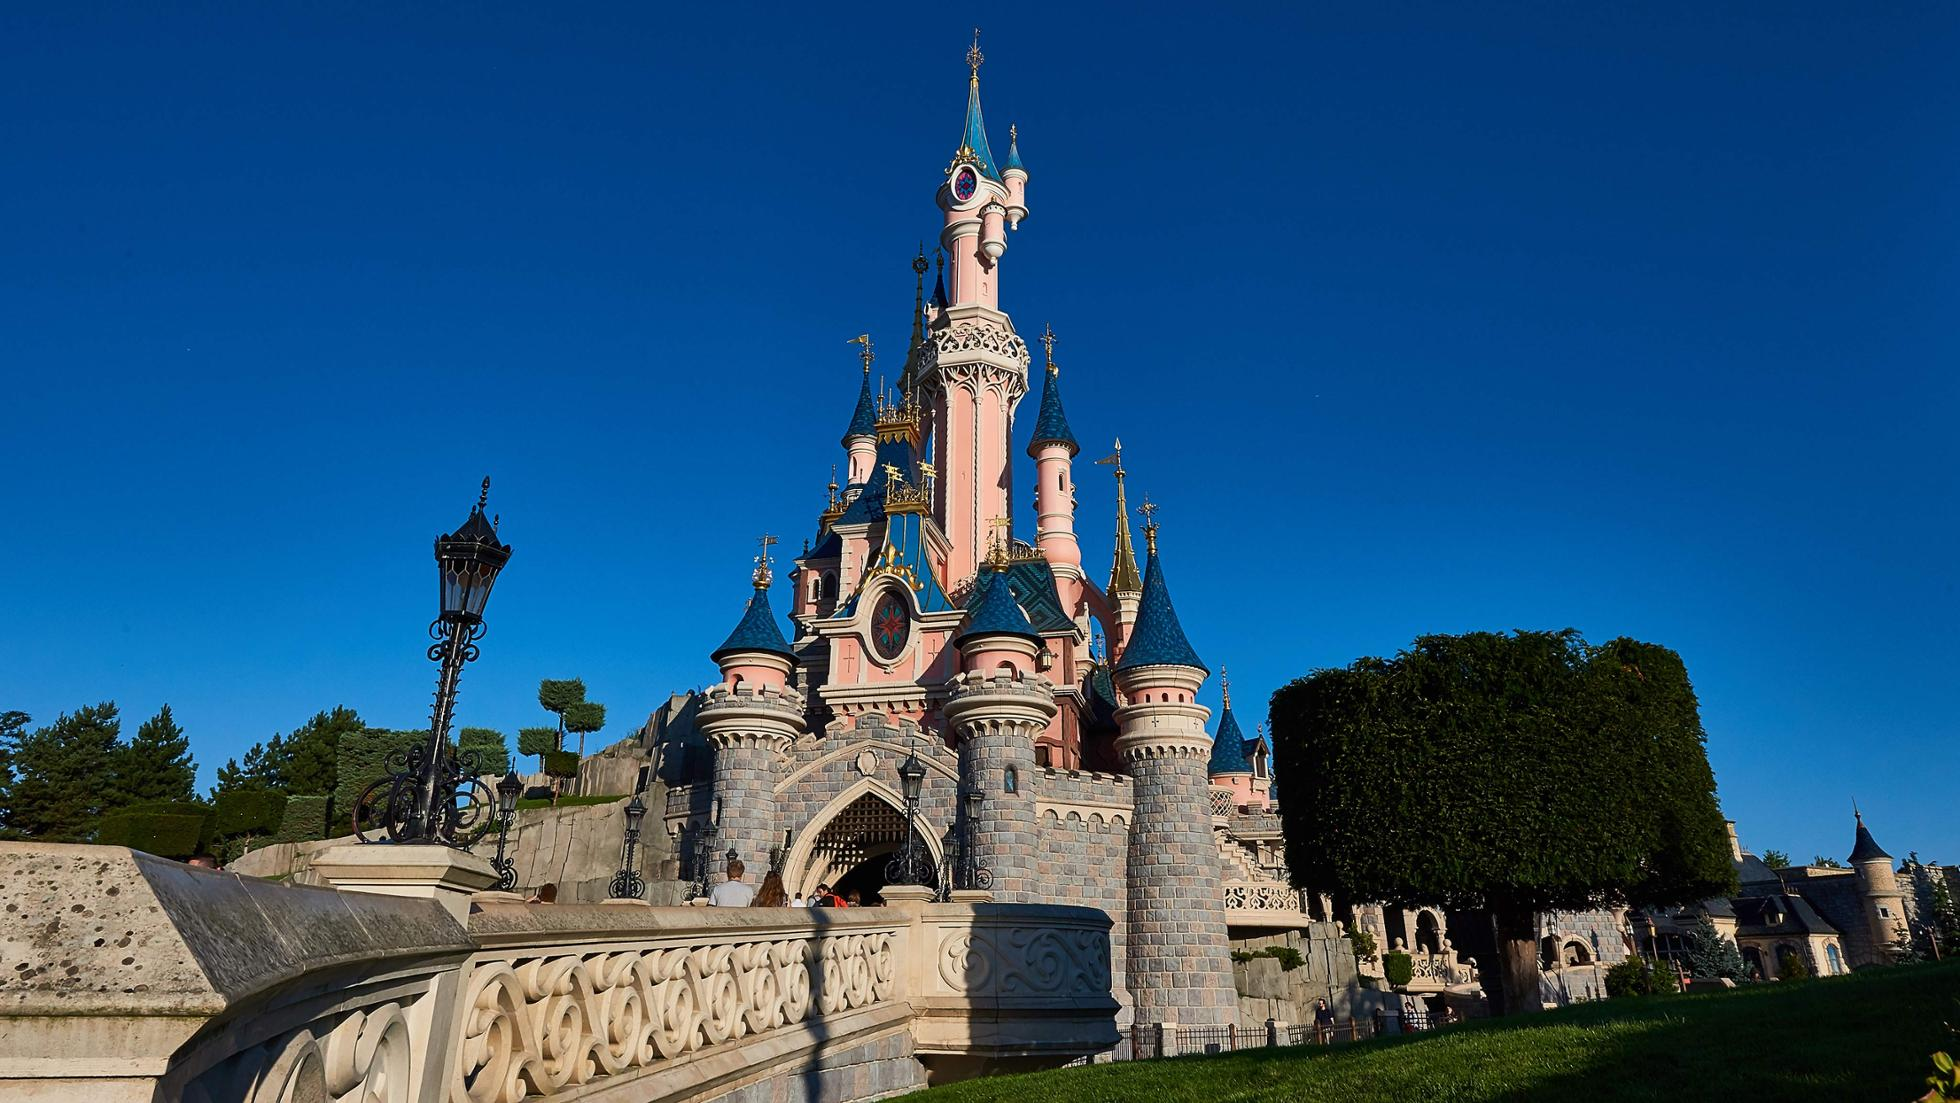 Disneyland Paris December Park Hours Released, Earlier Extra Magic Time